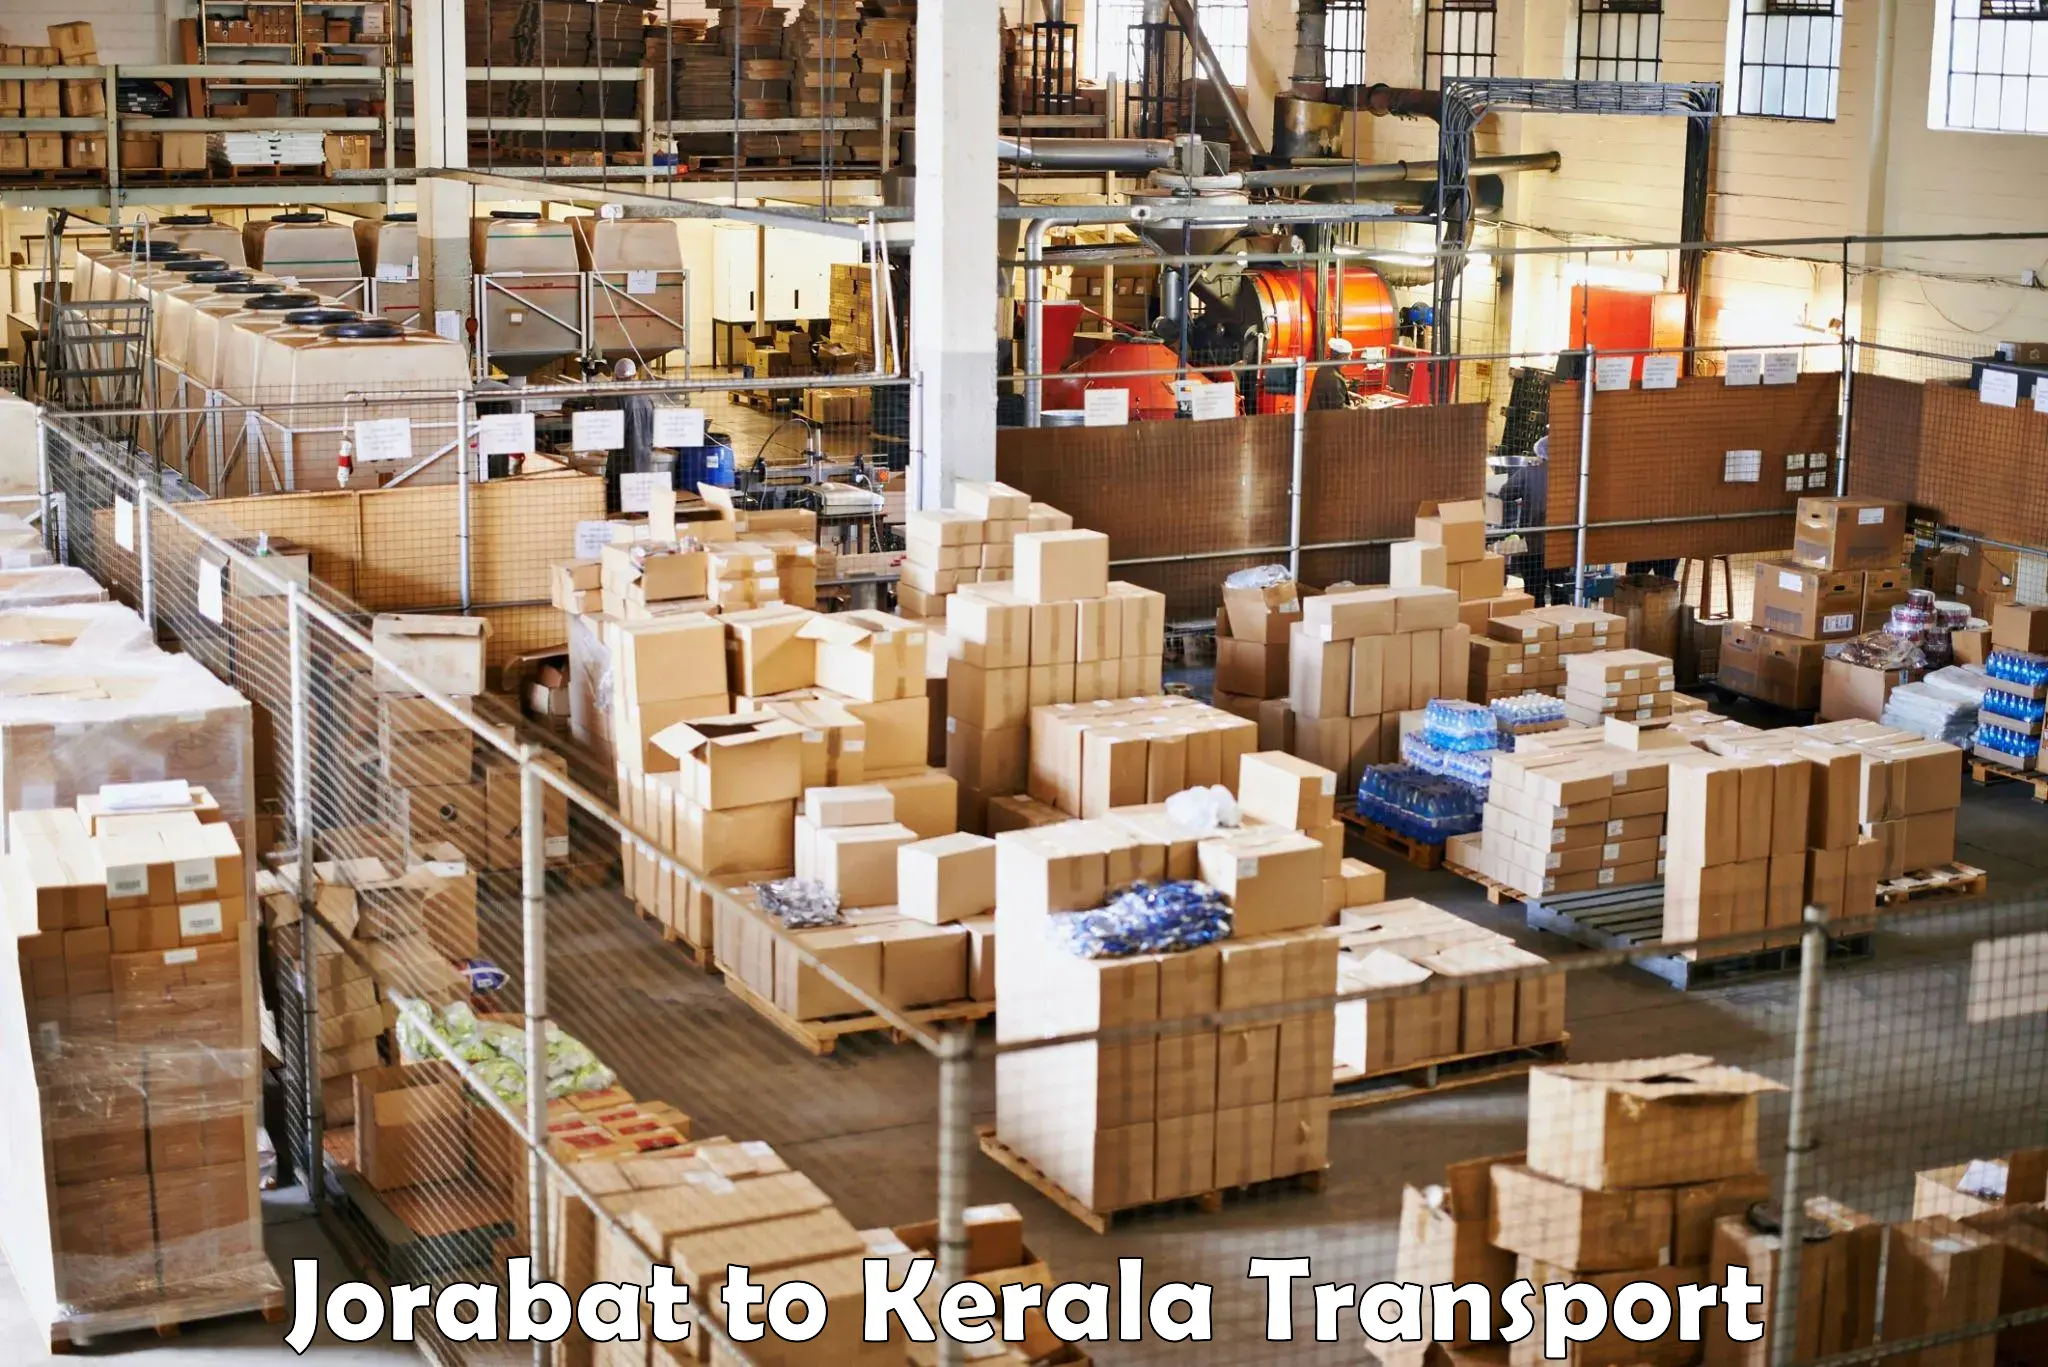 Delivery service Jorabat to Cochin Port Kochi